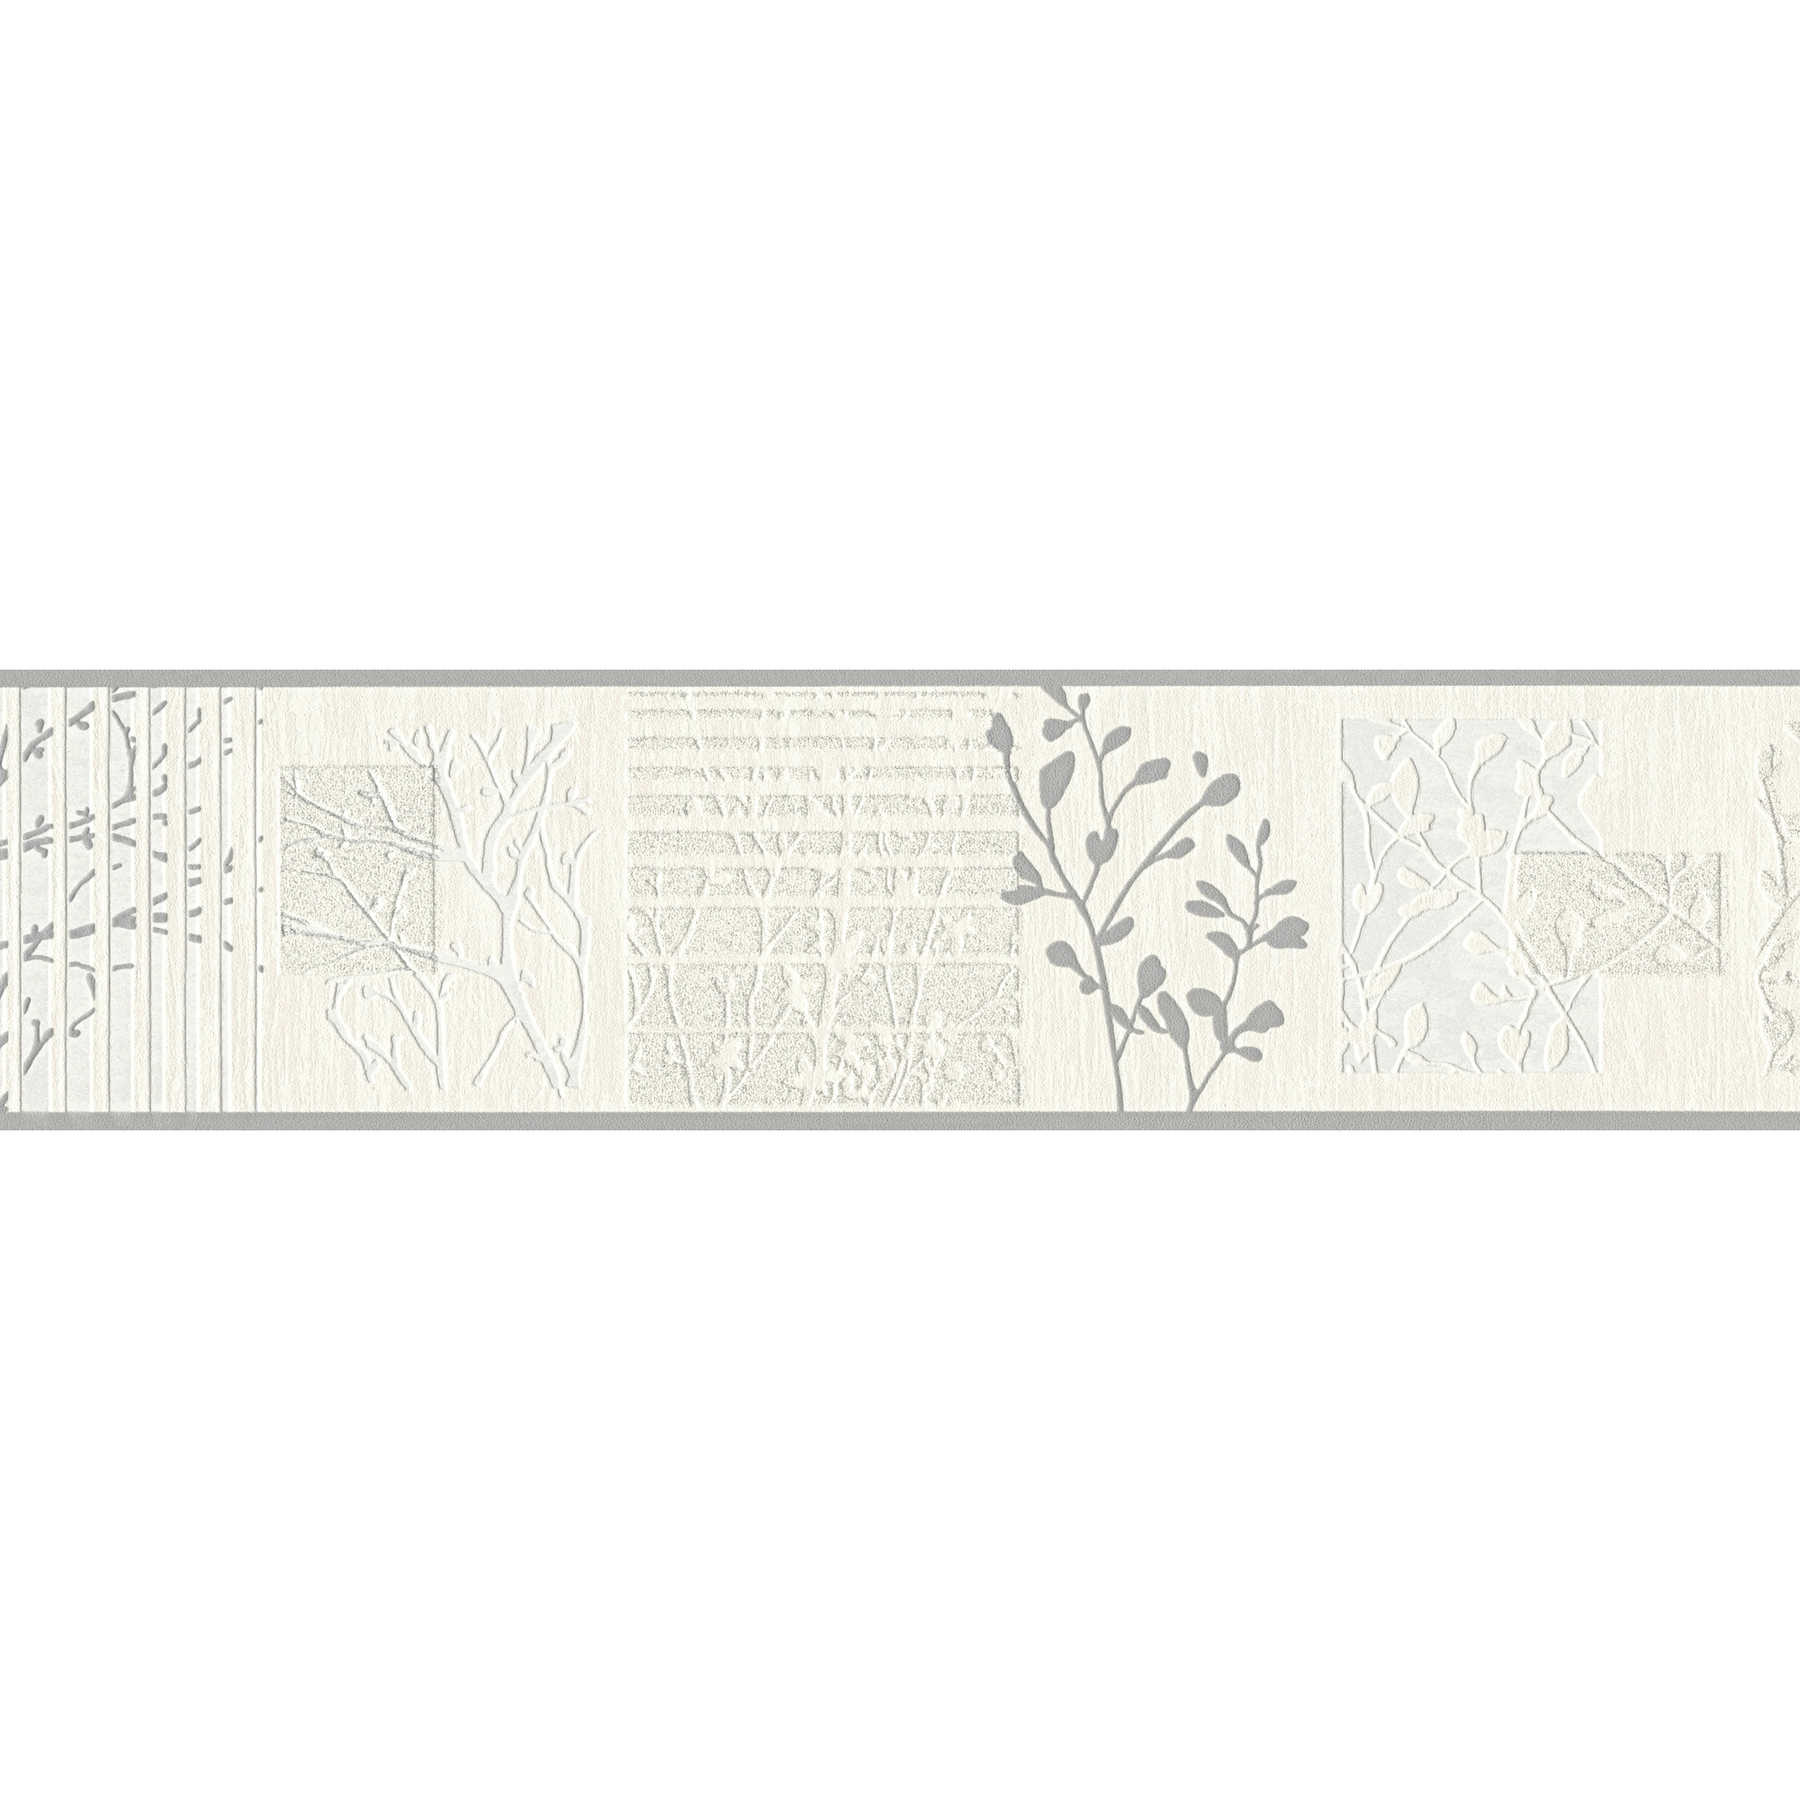         Floral wallpaper border with structure & metallic effect - Beige, Metallic
    